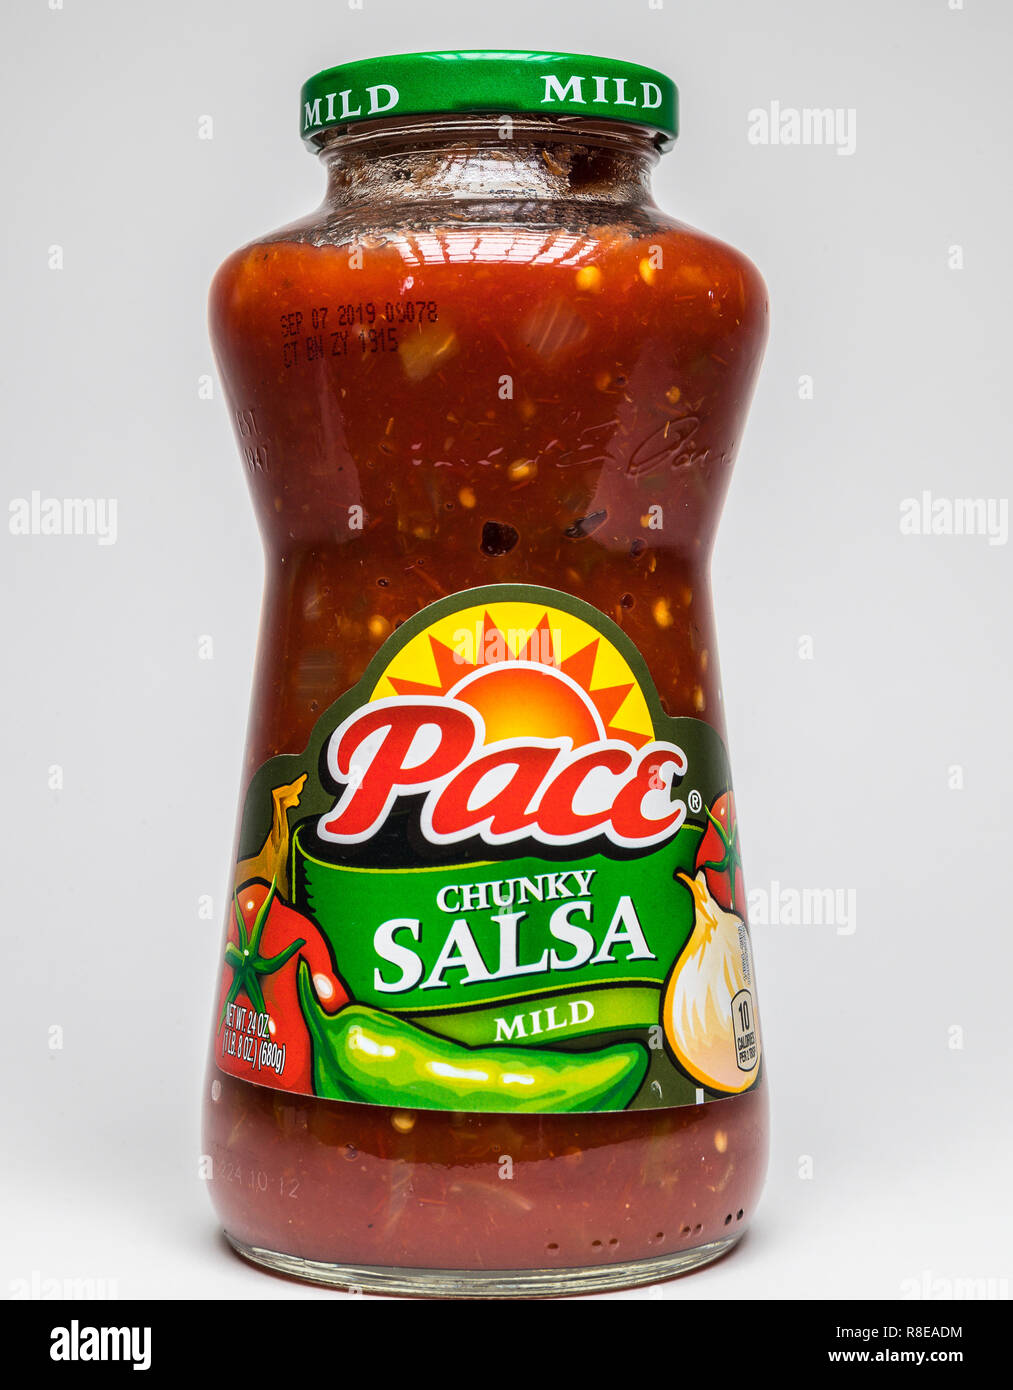 Pace Chunky Salsa, Mild, 16 oz Jar